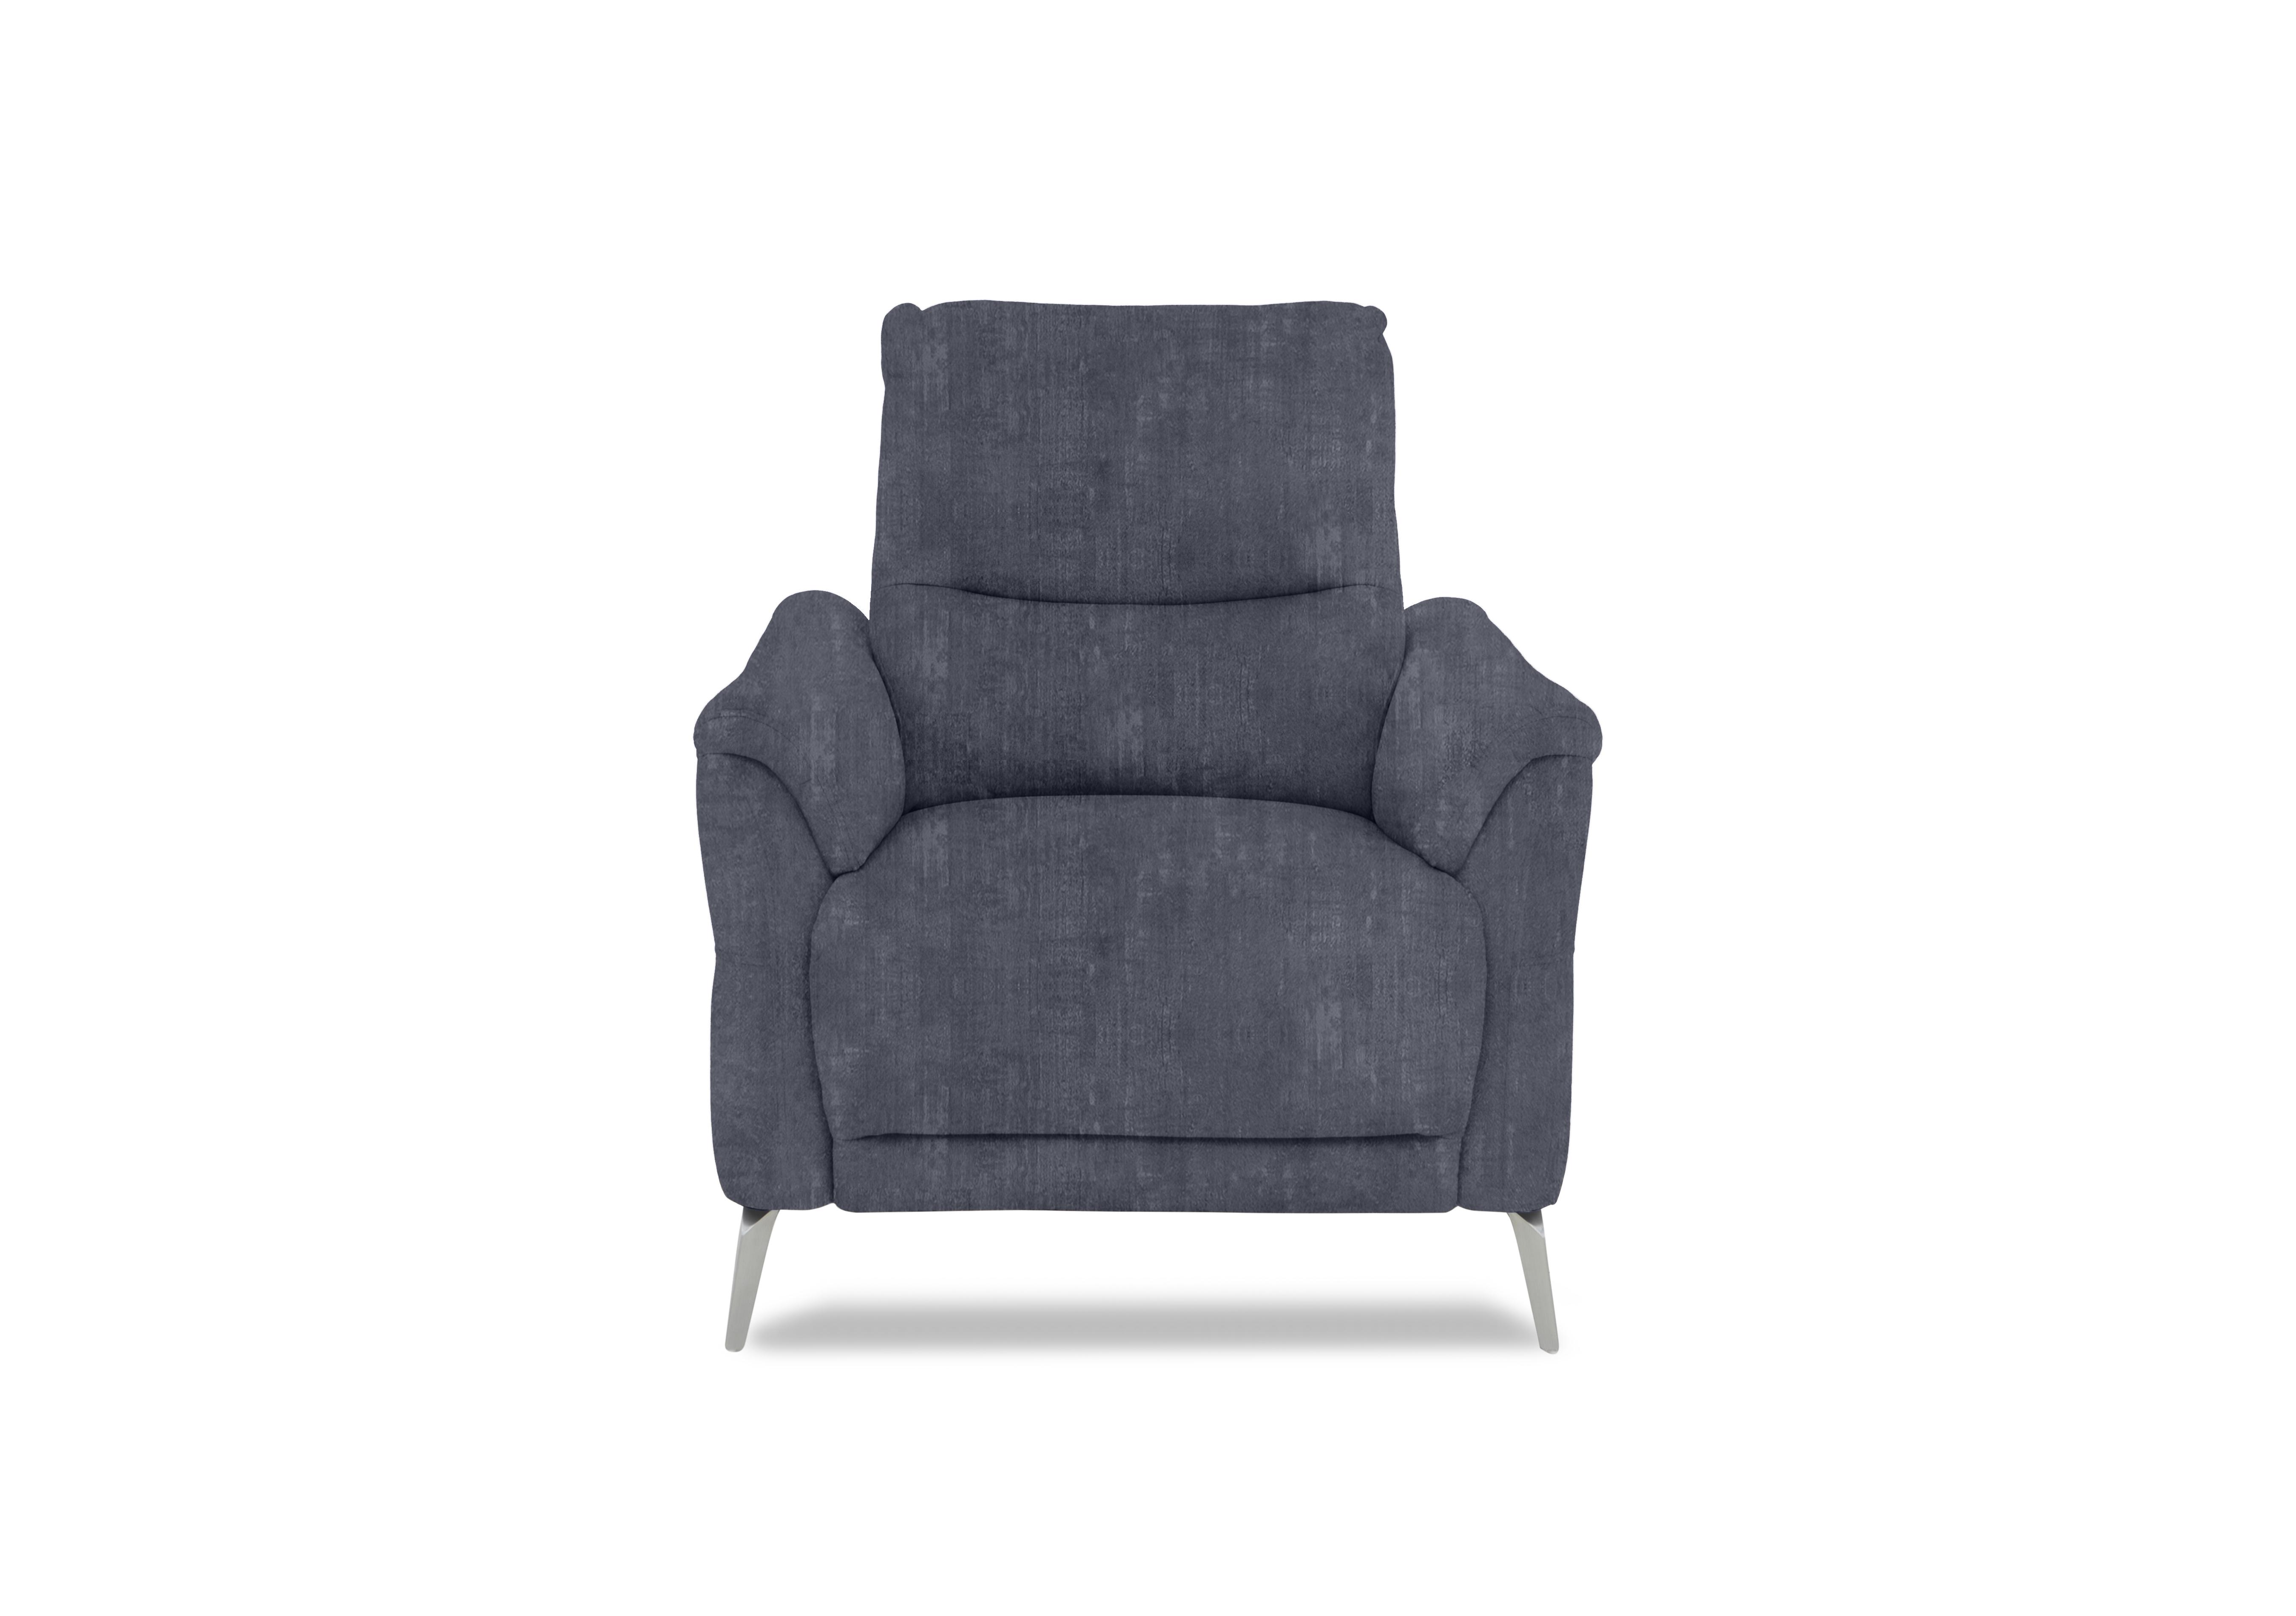 Daytona Fabric Chair in 52001 Heritage Granite on Furniture Village